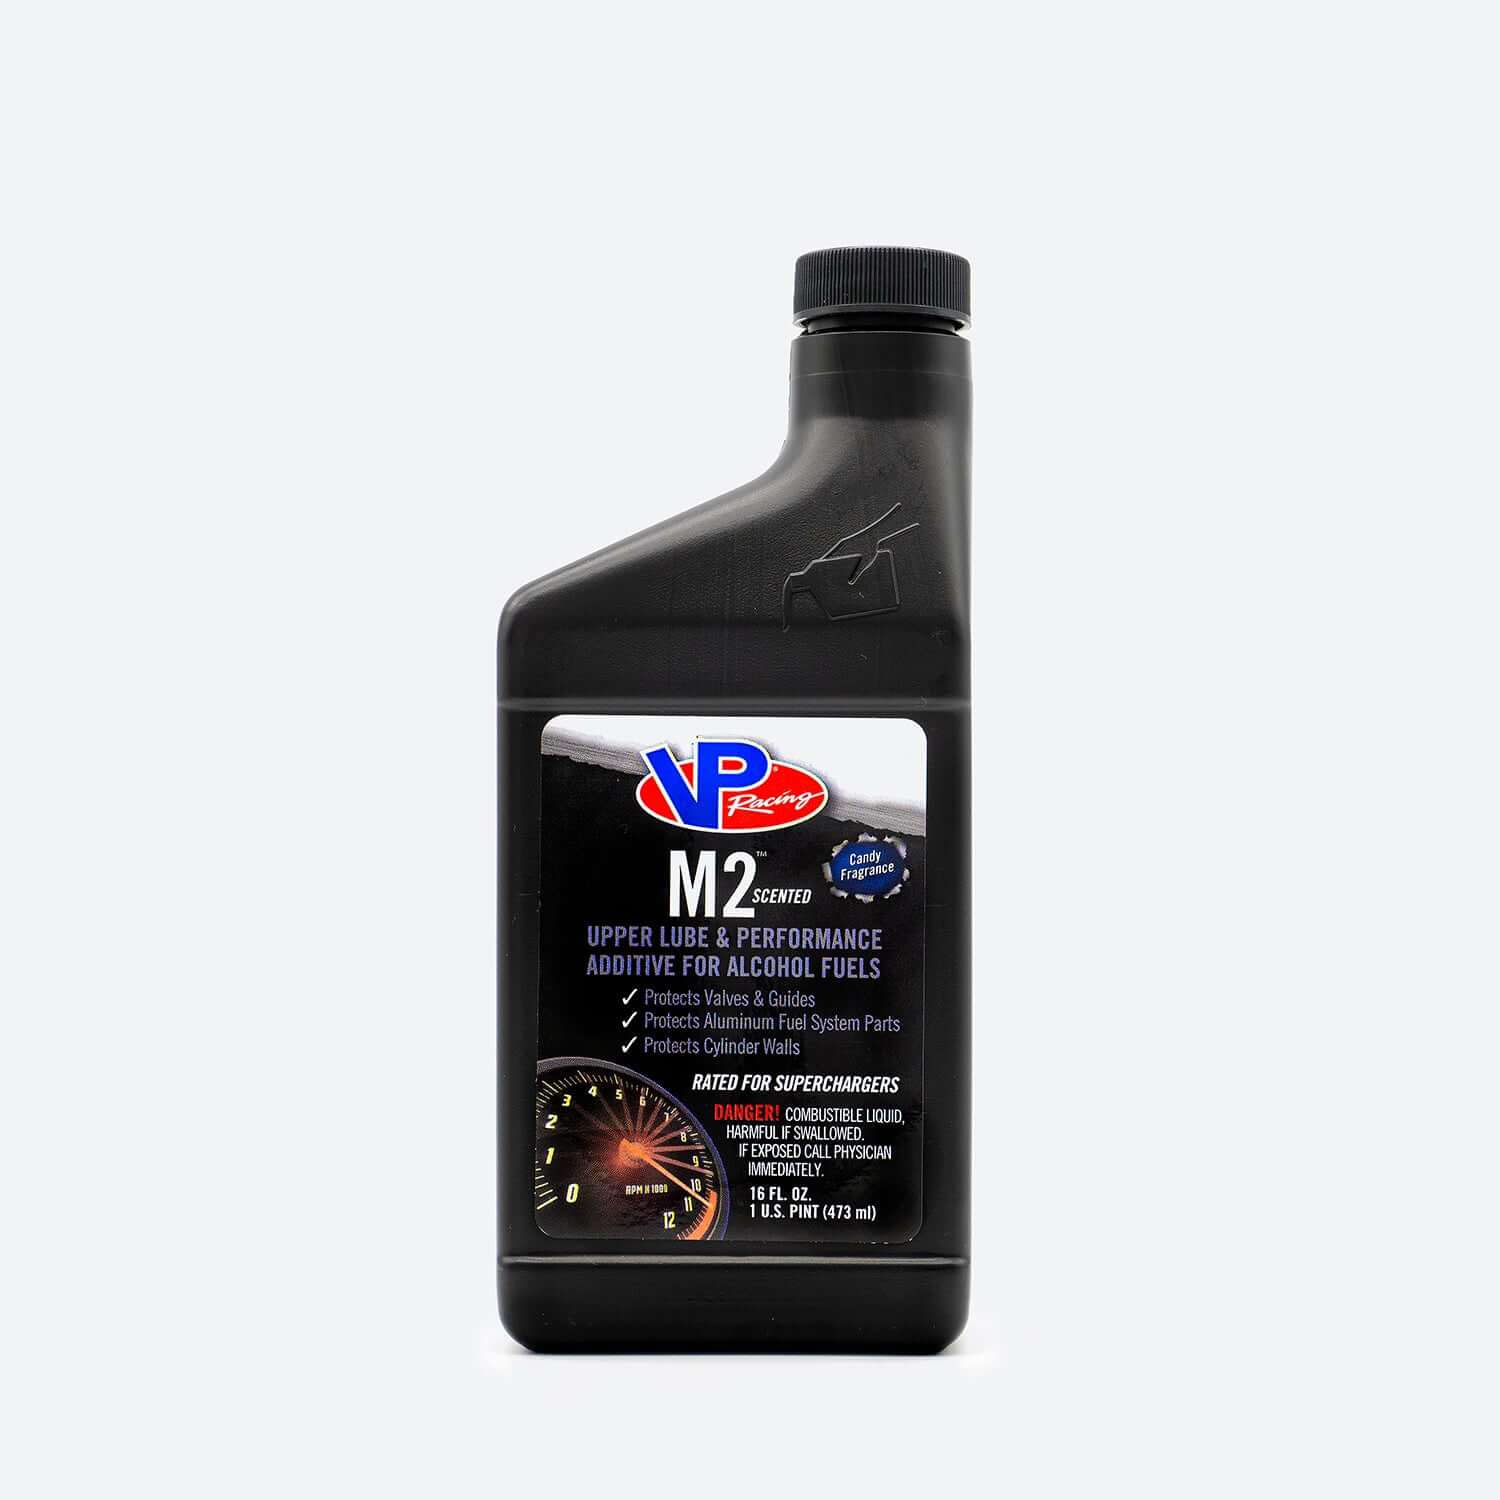 M2 Bottle Image